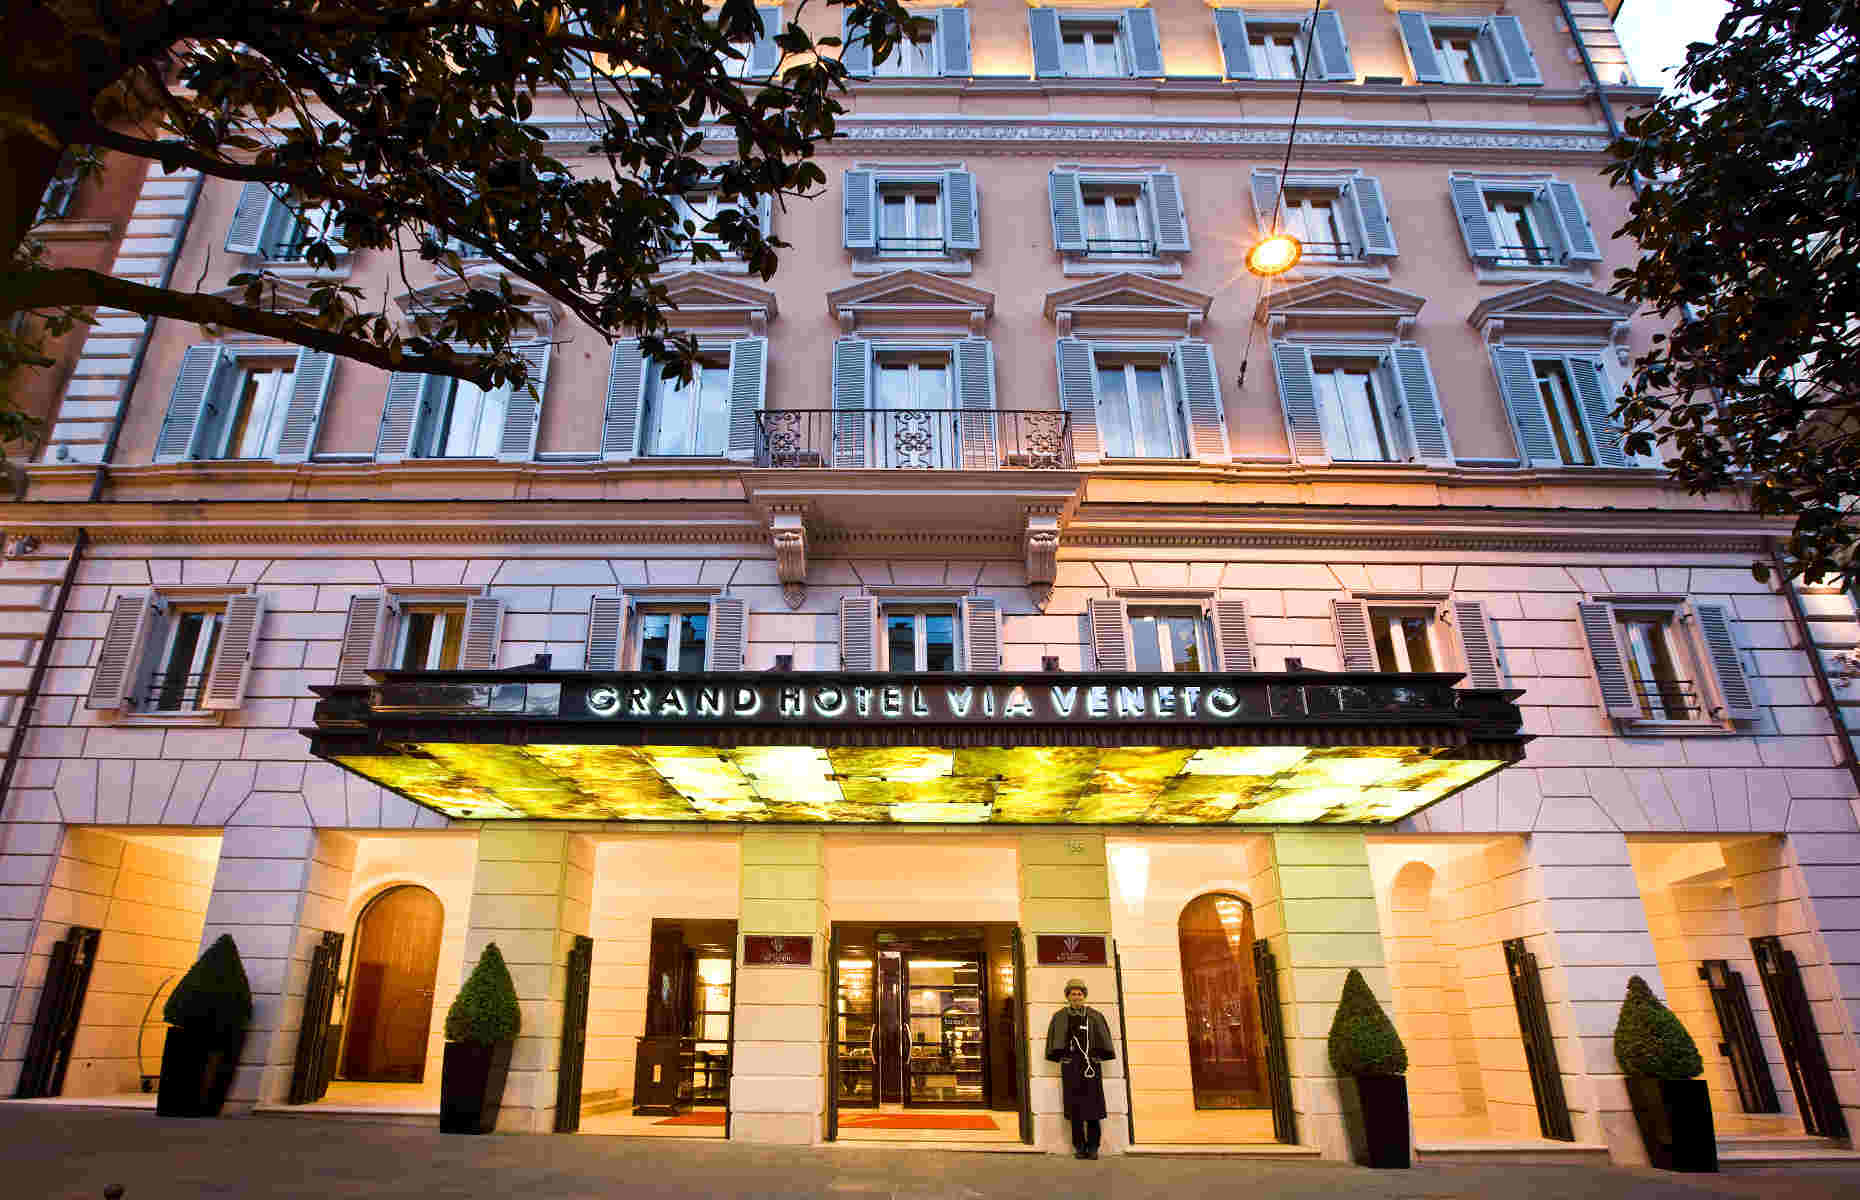 Grand Hotel Via Veneto - Hôtel Rome, Italie